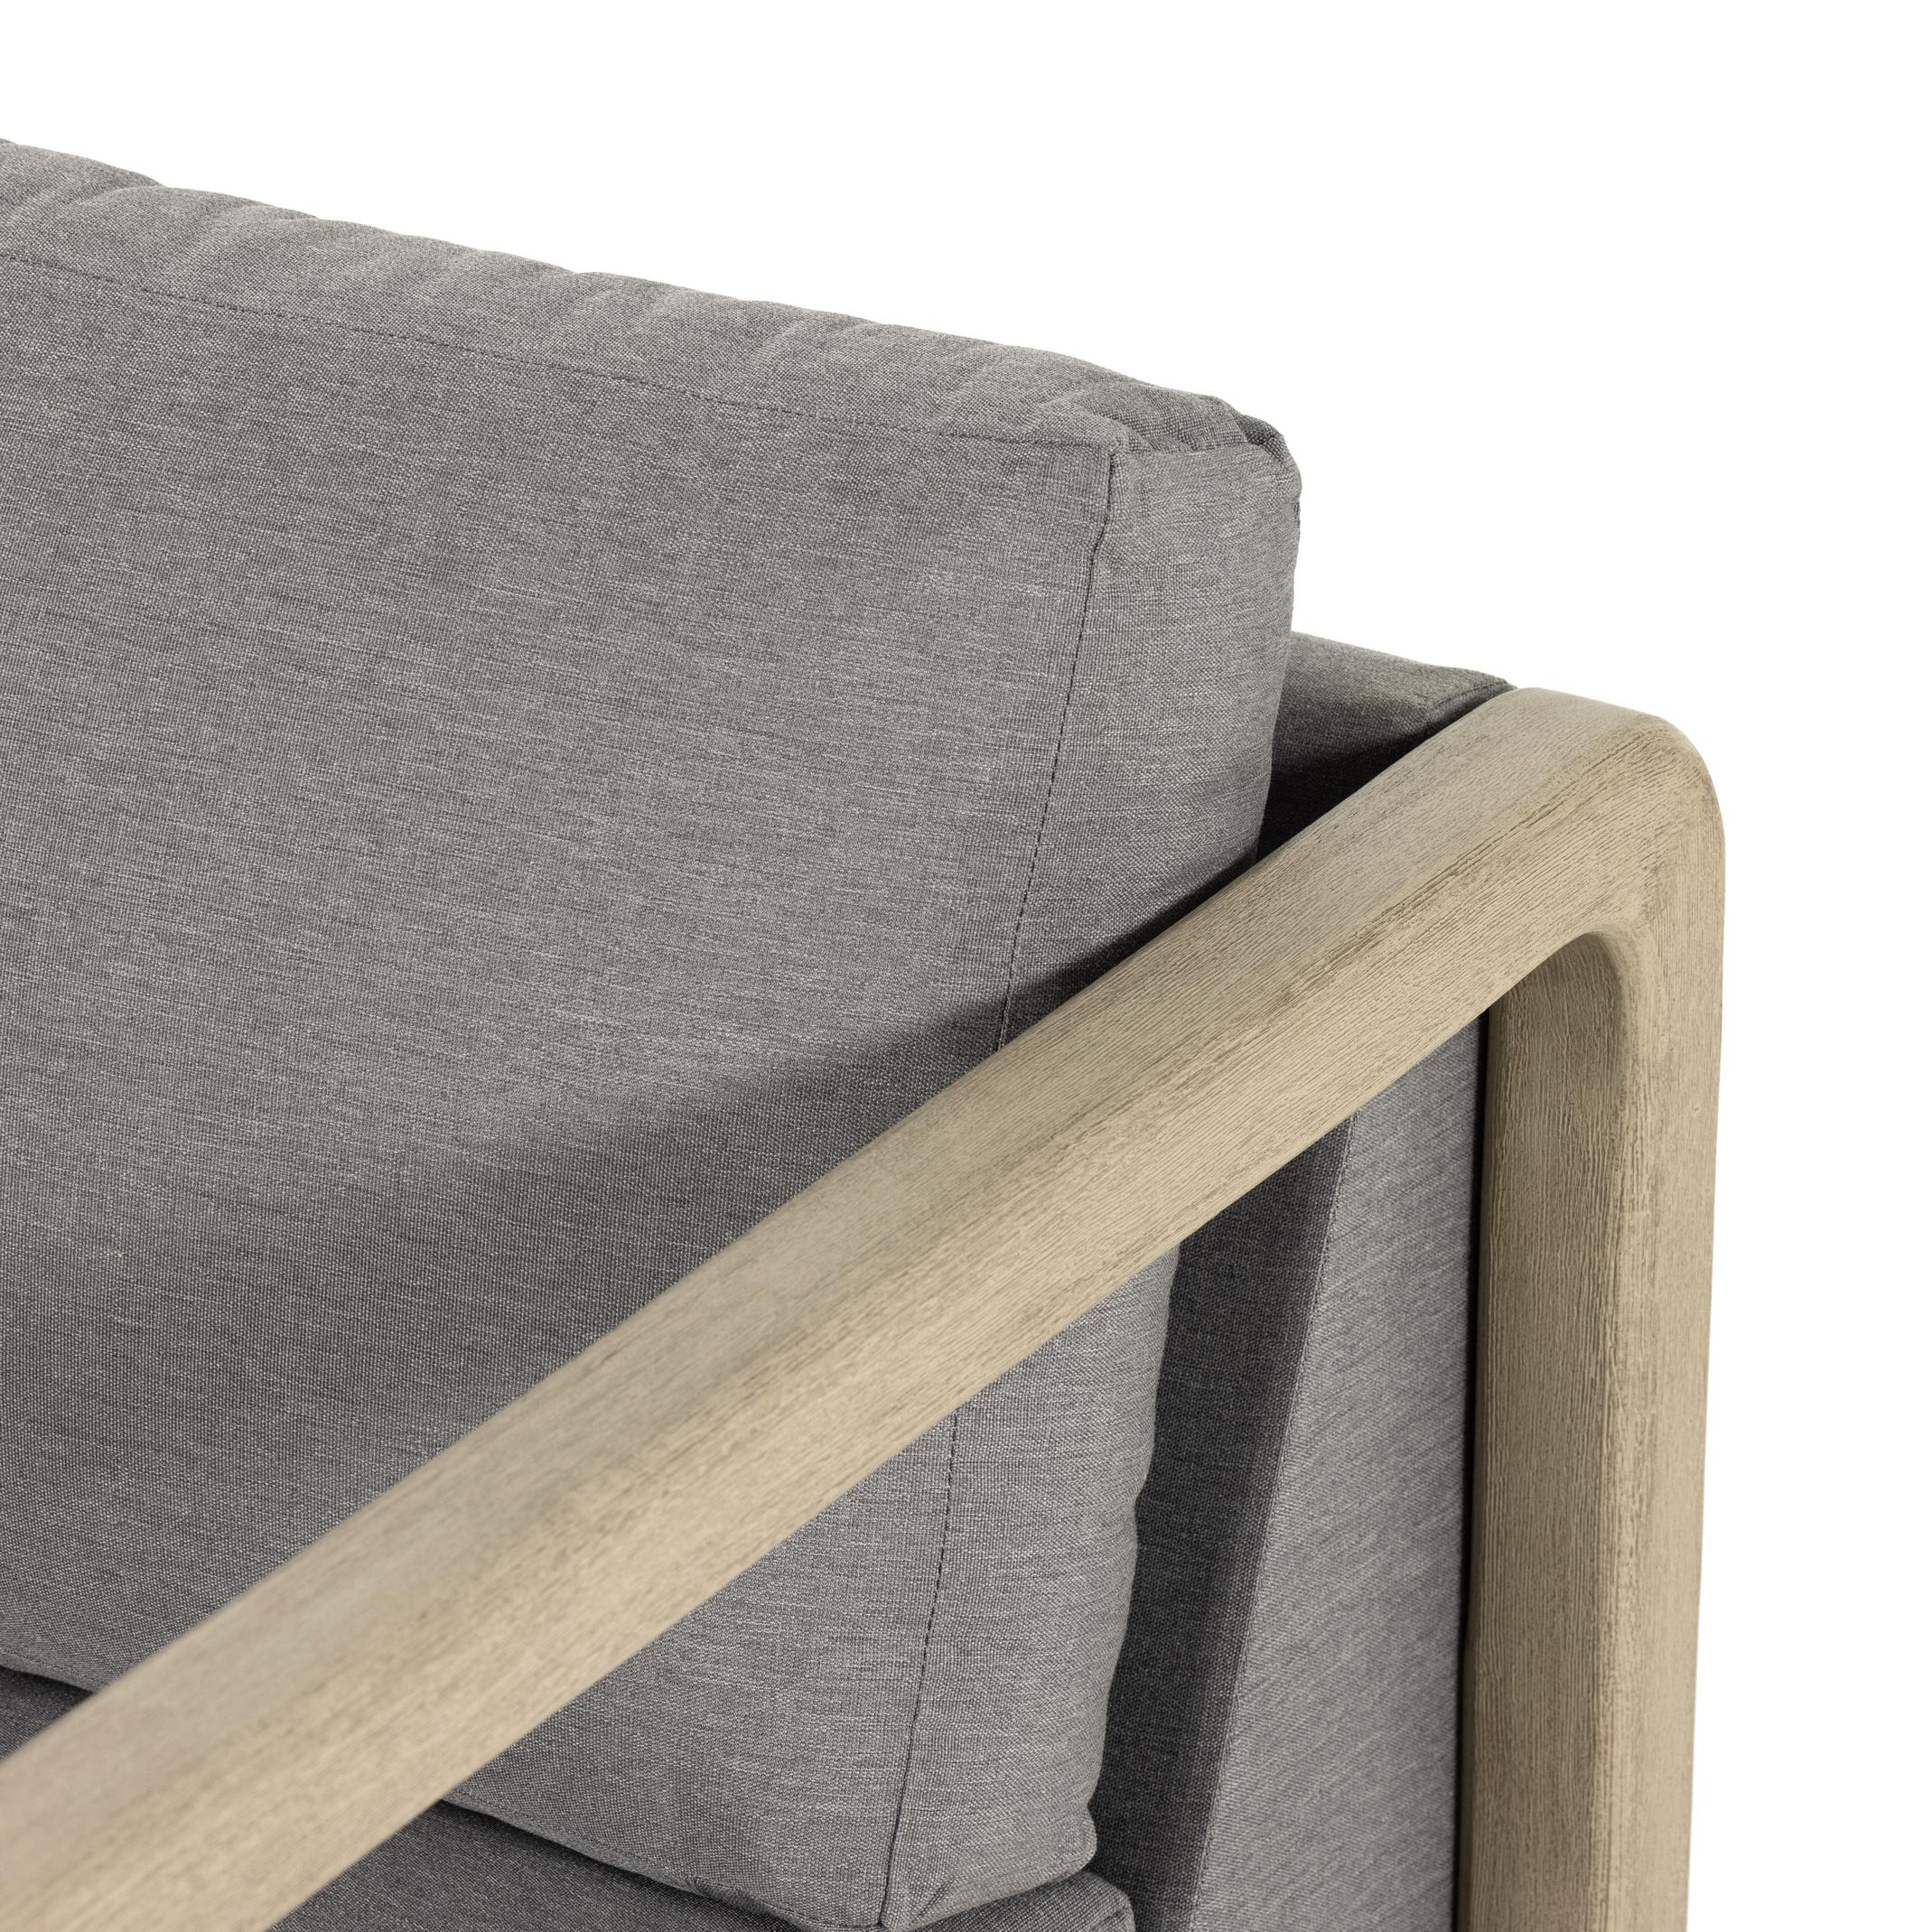 Callan Outdoor Chair - StyleMeGHD - Modern Home Decor